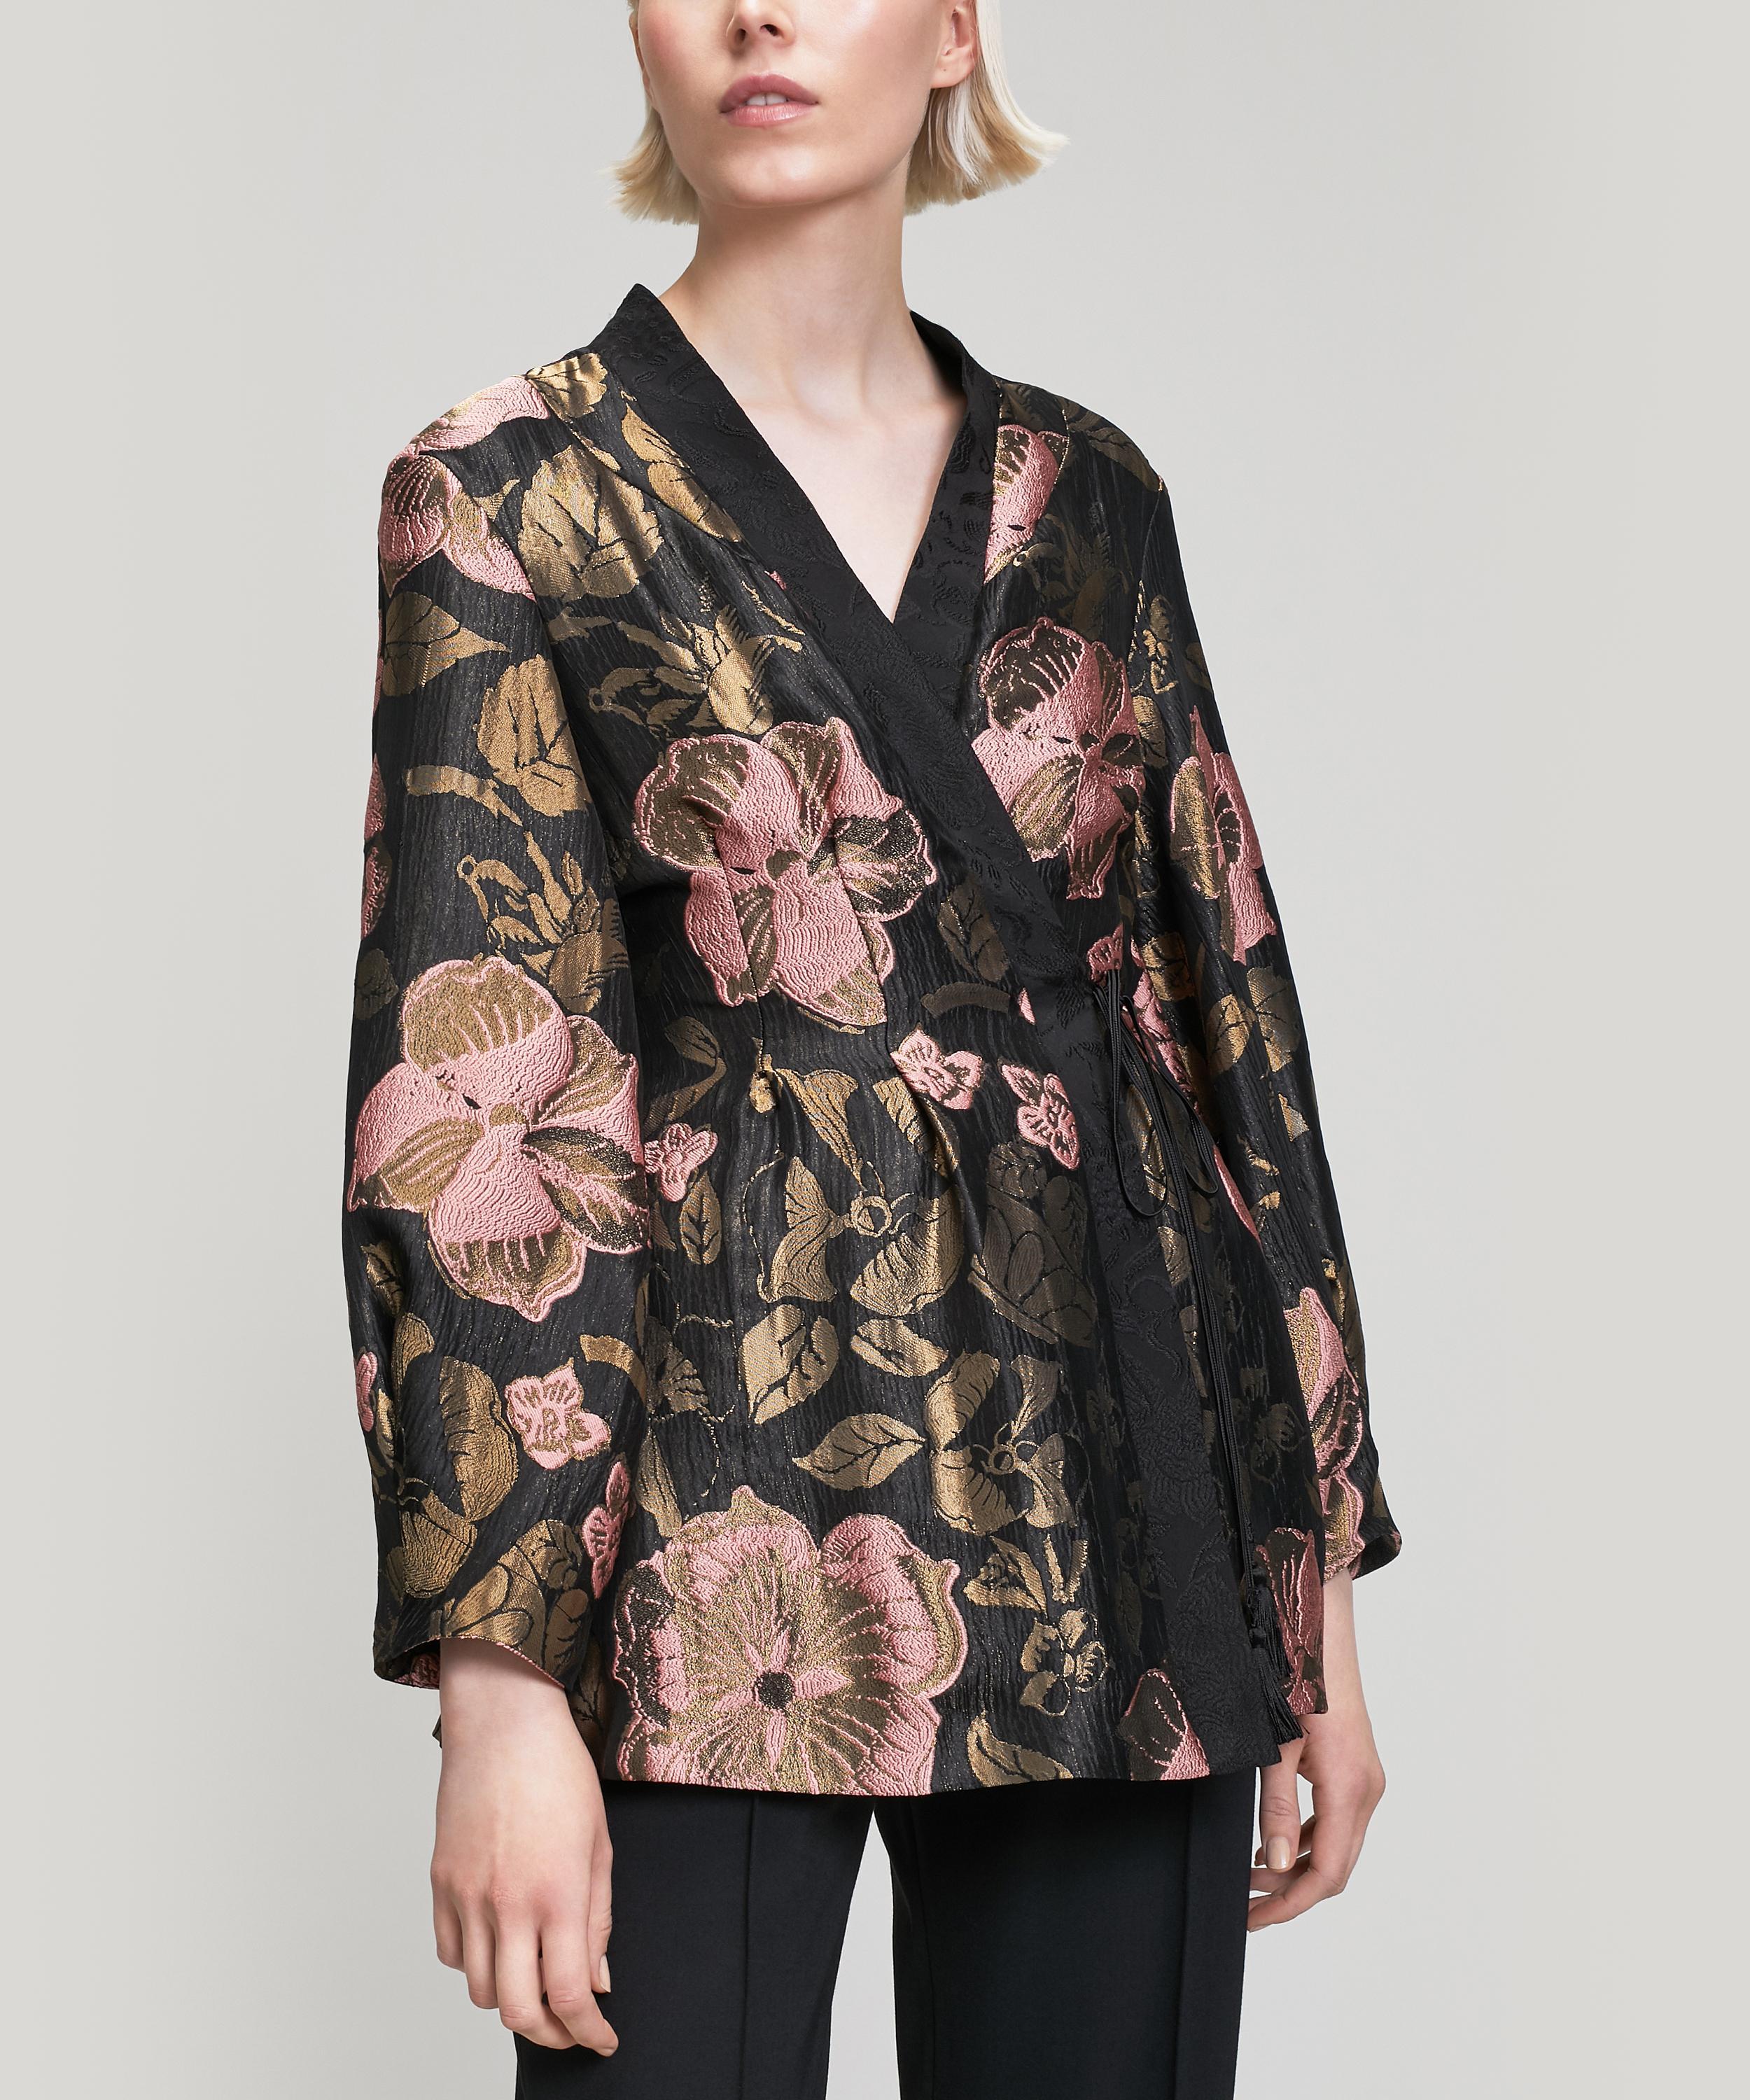 Lyst - Etro Floral Jacquard Kaftan Coat in Black